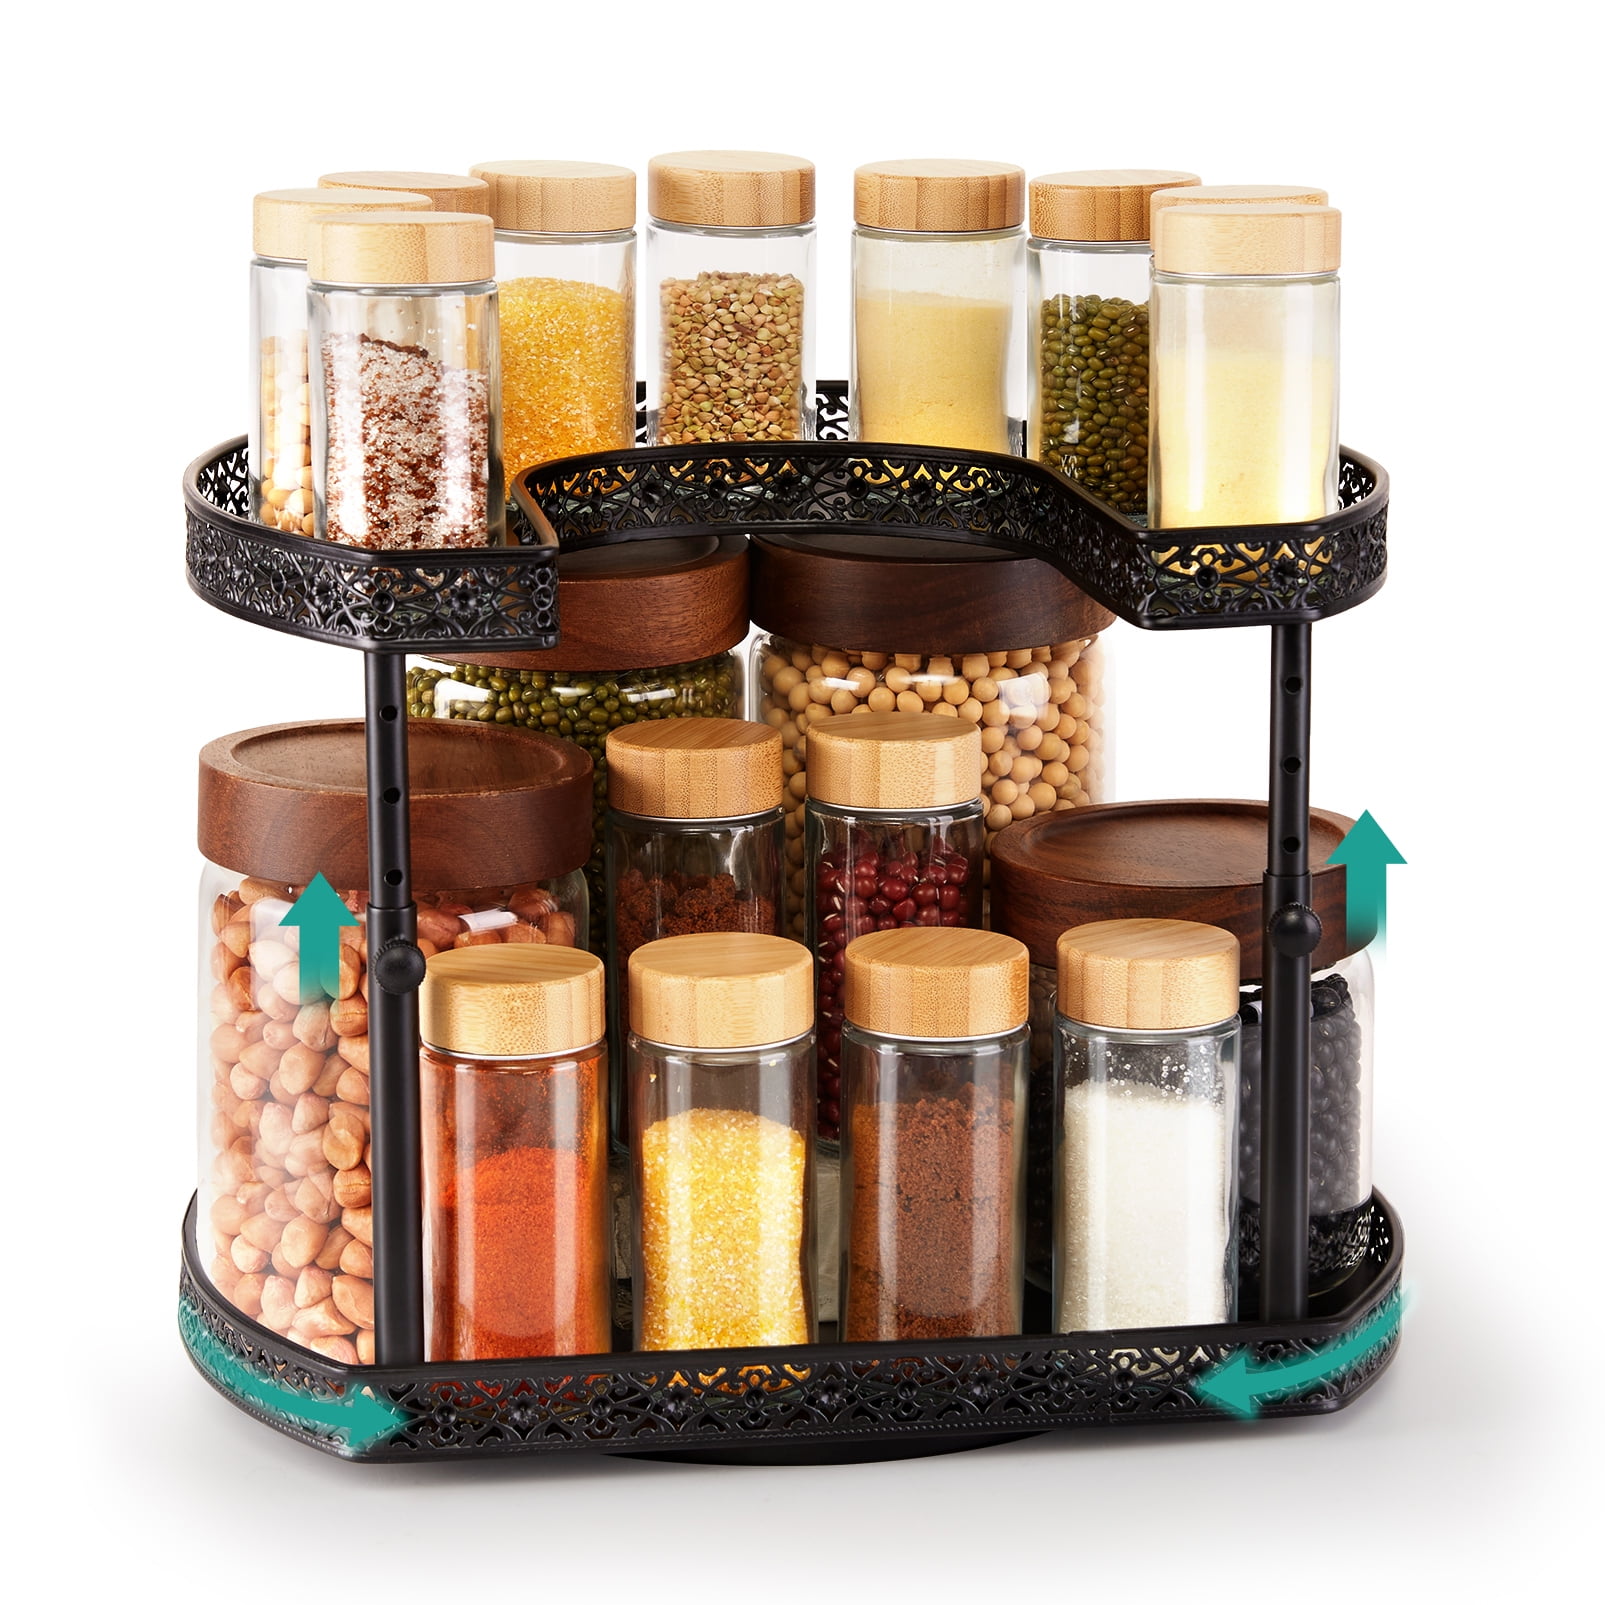 8 Jars Spice Rack set